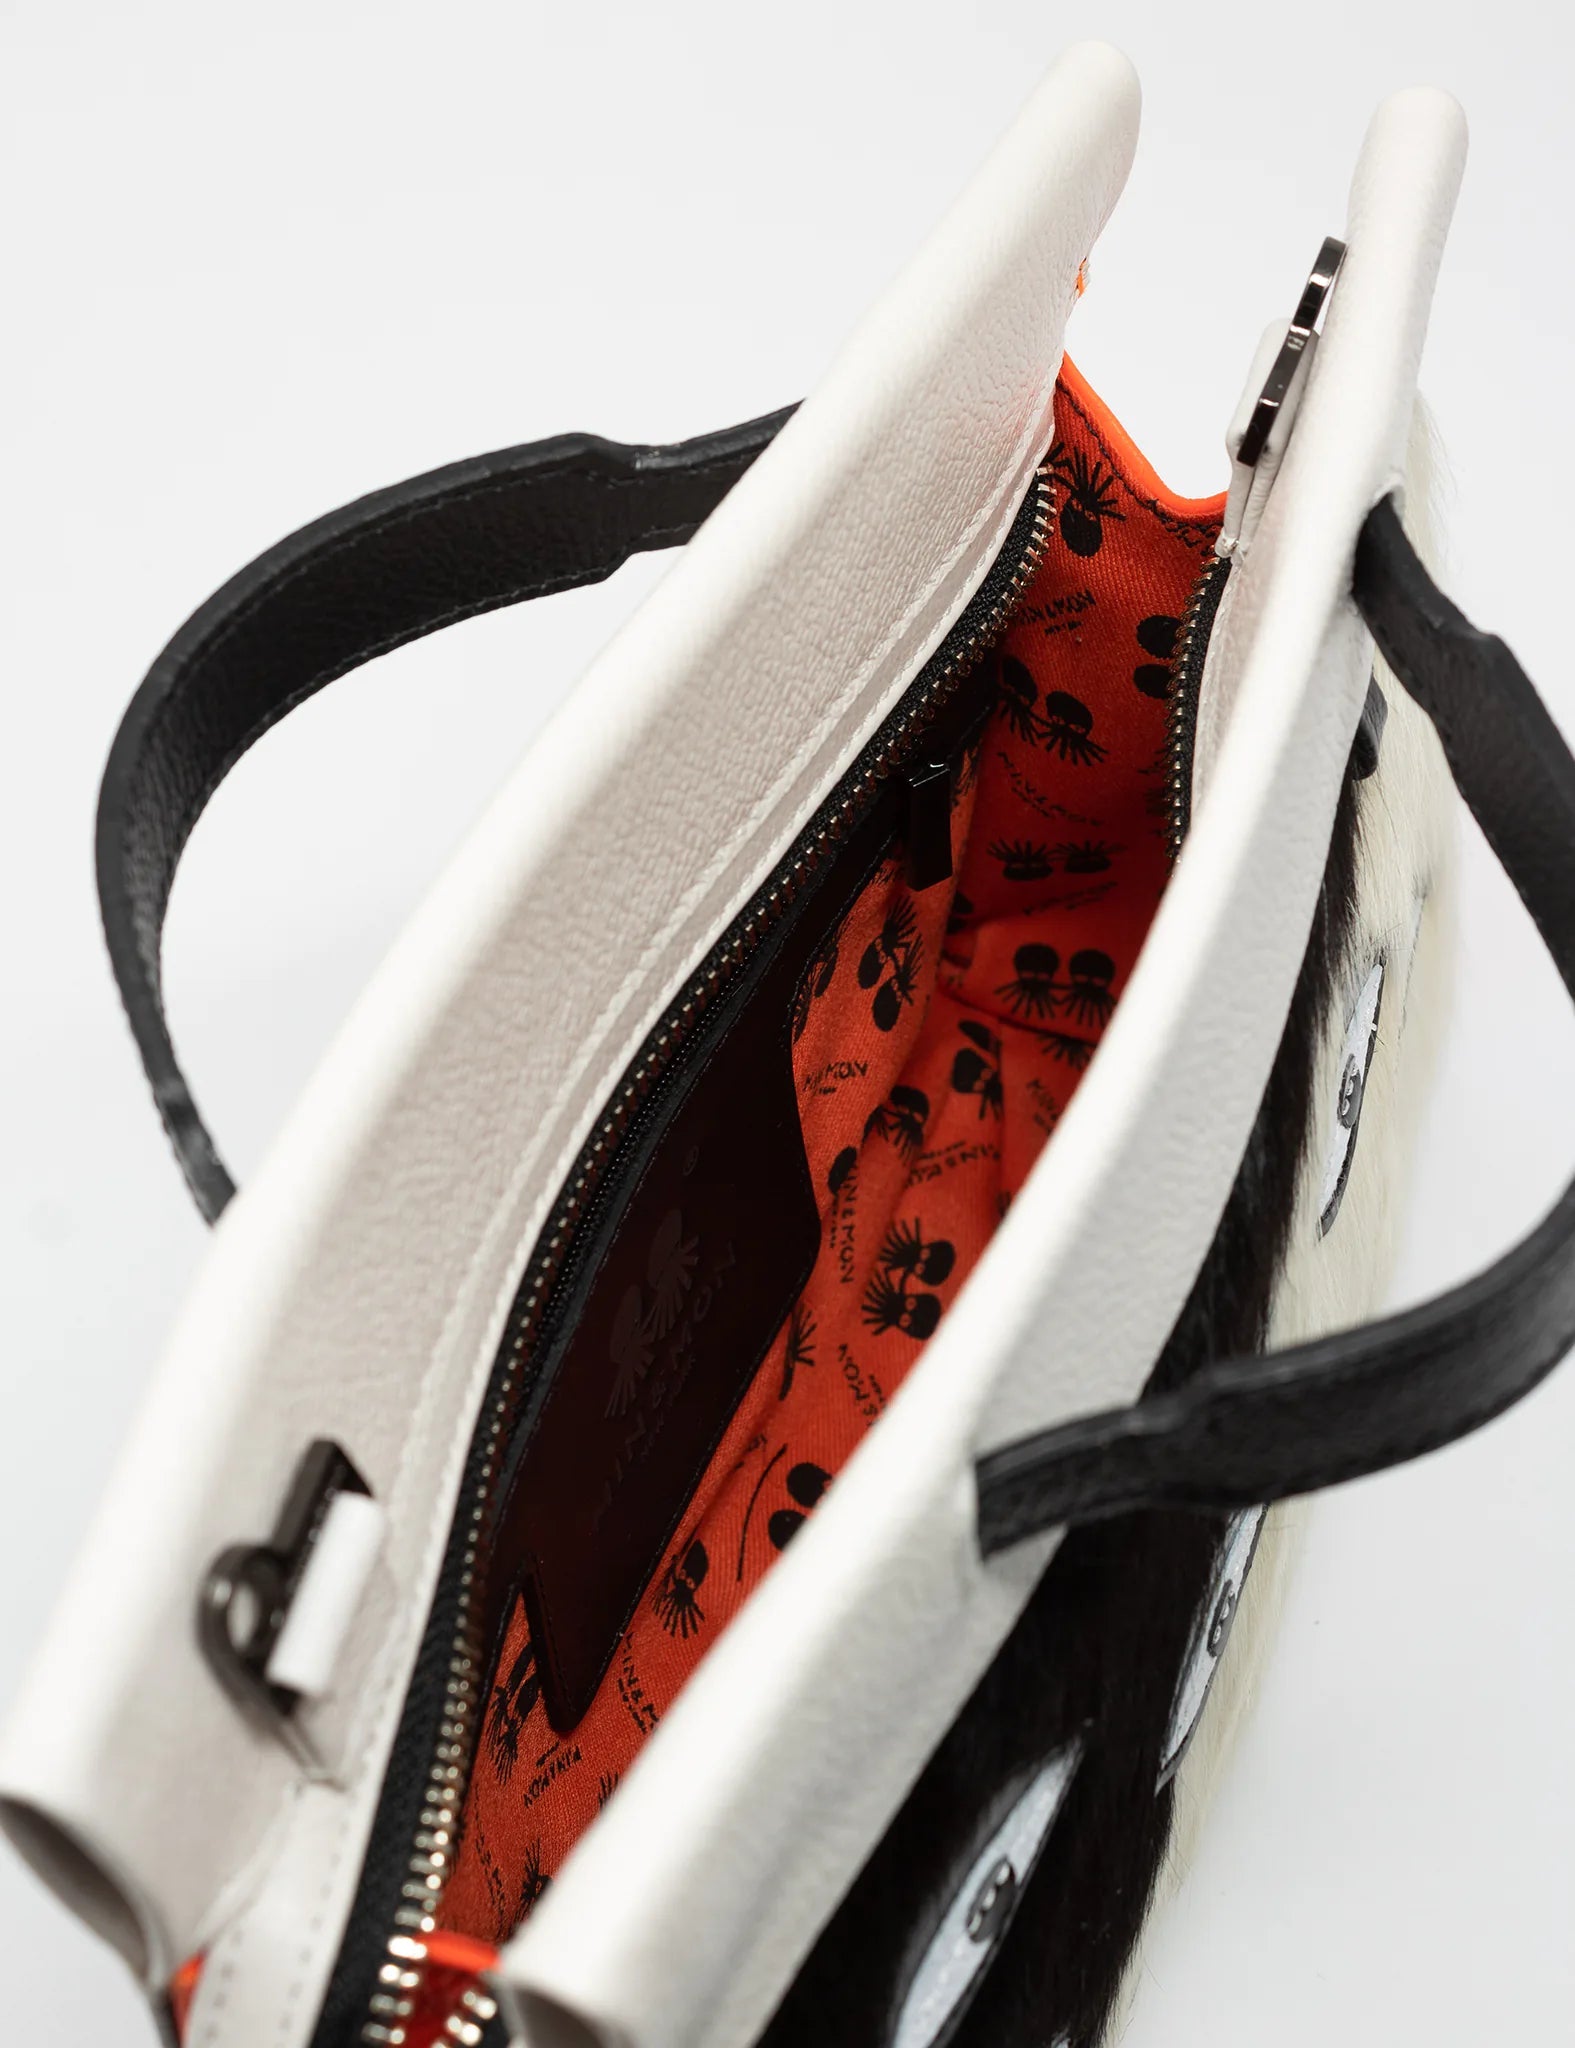 Vali Crossbody Small Black And Neon Orange Leather Bag - Eyes Applique Adjustable Handle - Inside view